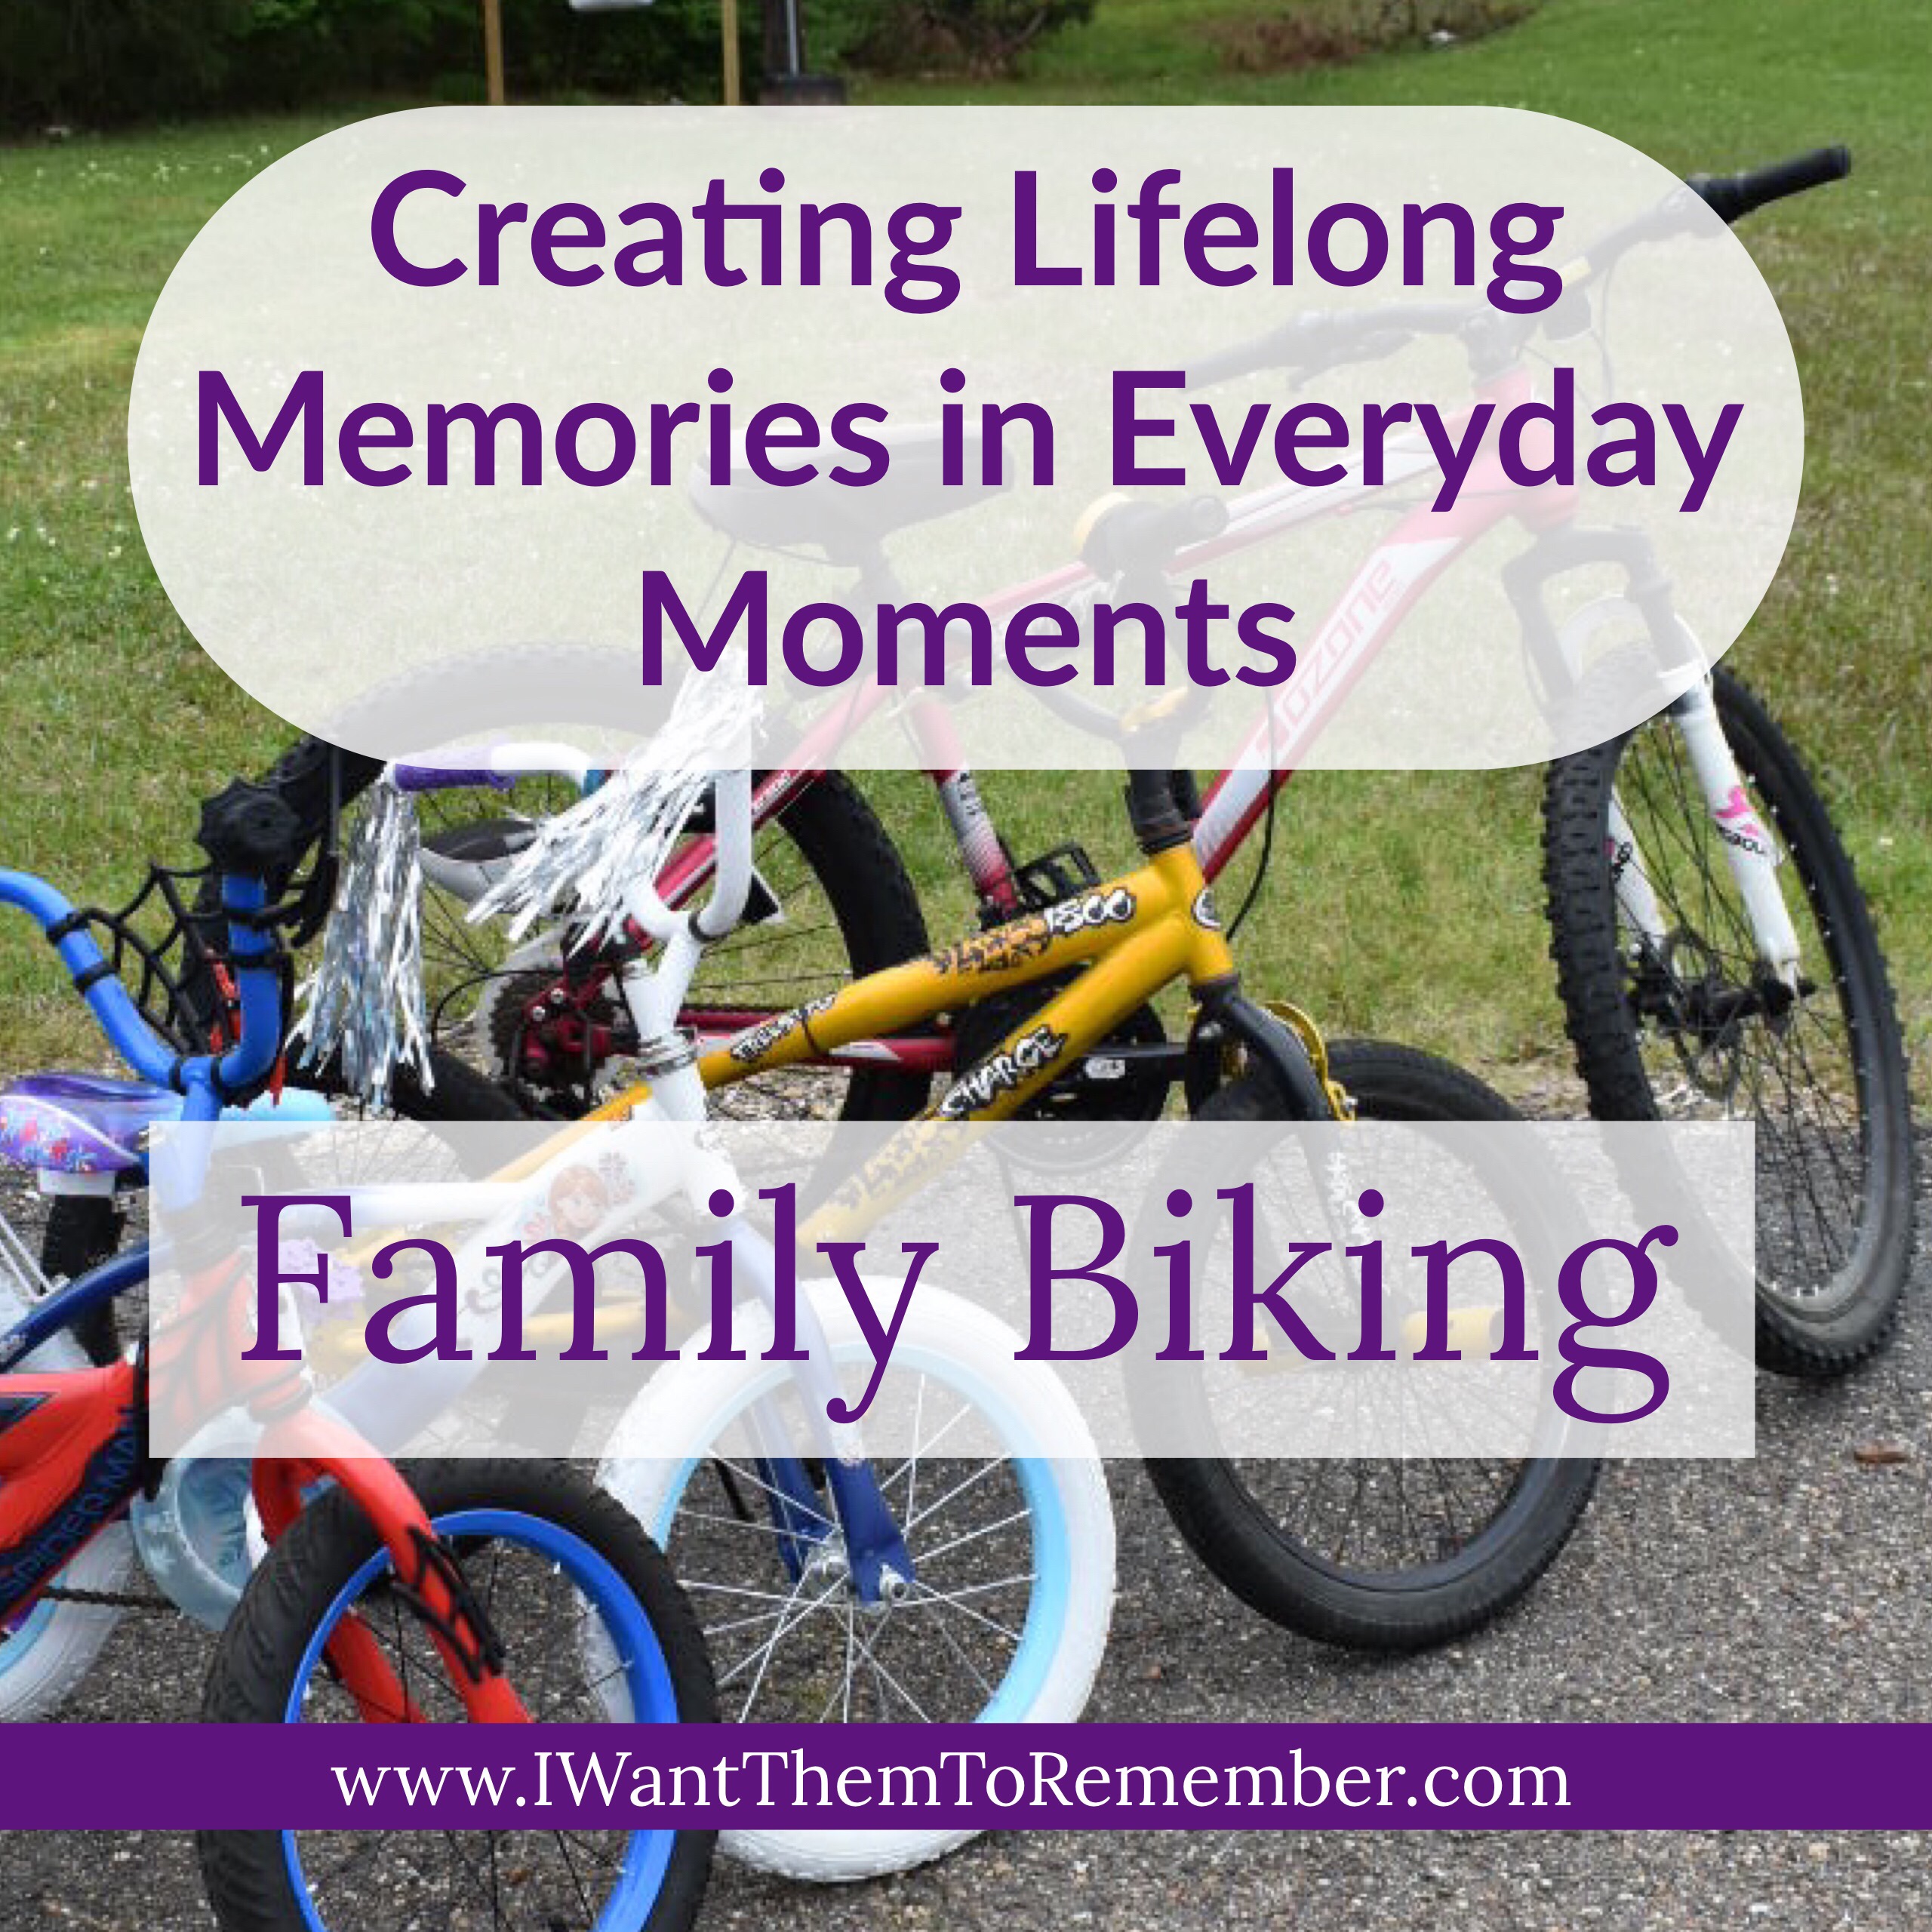 Family Biking: Creating Lifelong Memories in Everyday Moments